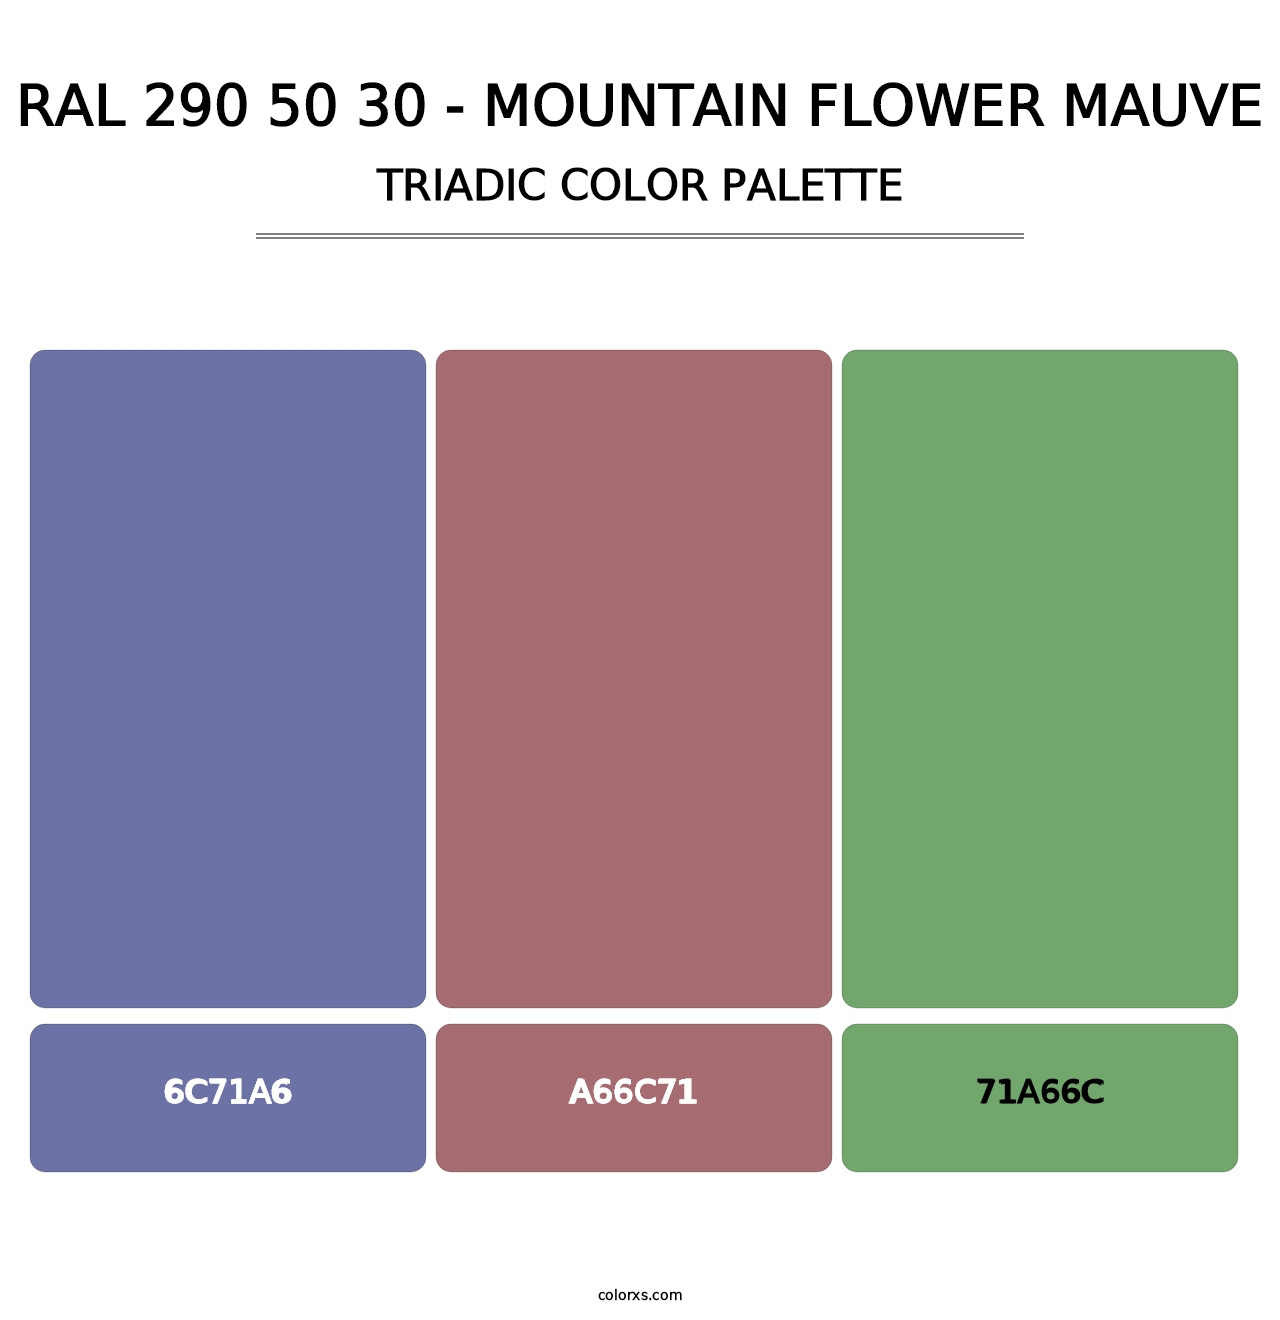 RAL 290 50 30 - Mountain Flower Mauve - Triadic Color Palette